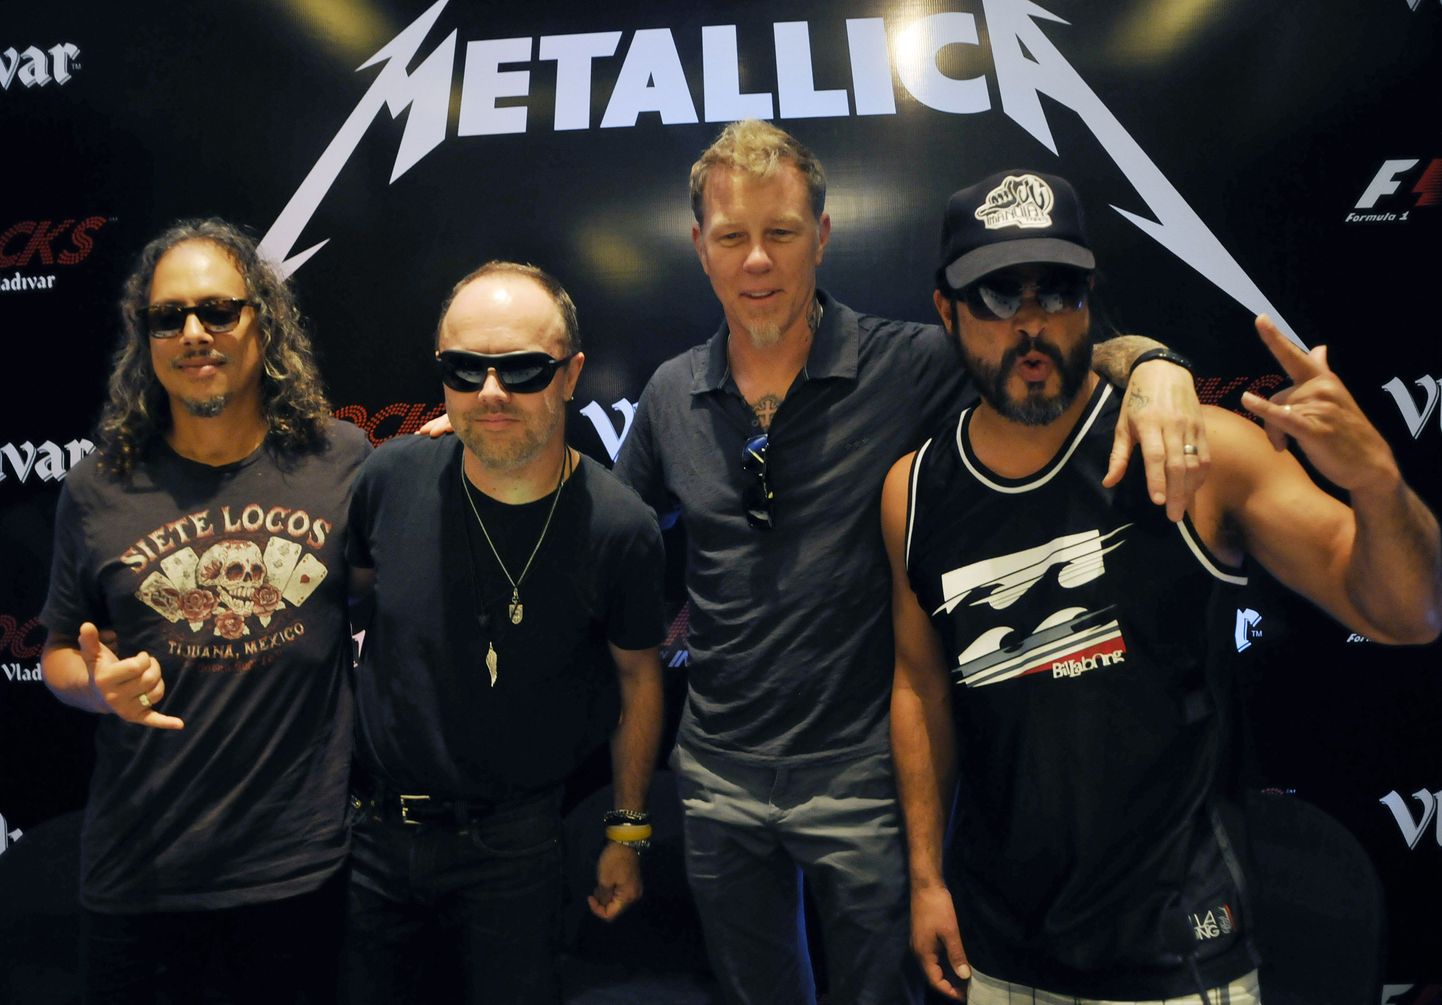 Metallica liikmed vasakult paremale -  Kirk Hammett, Lars Ulrich, James Hetfield ja Robert Trujillo